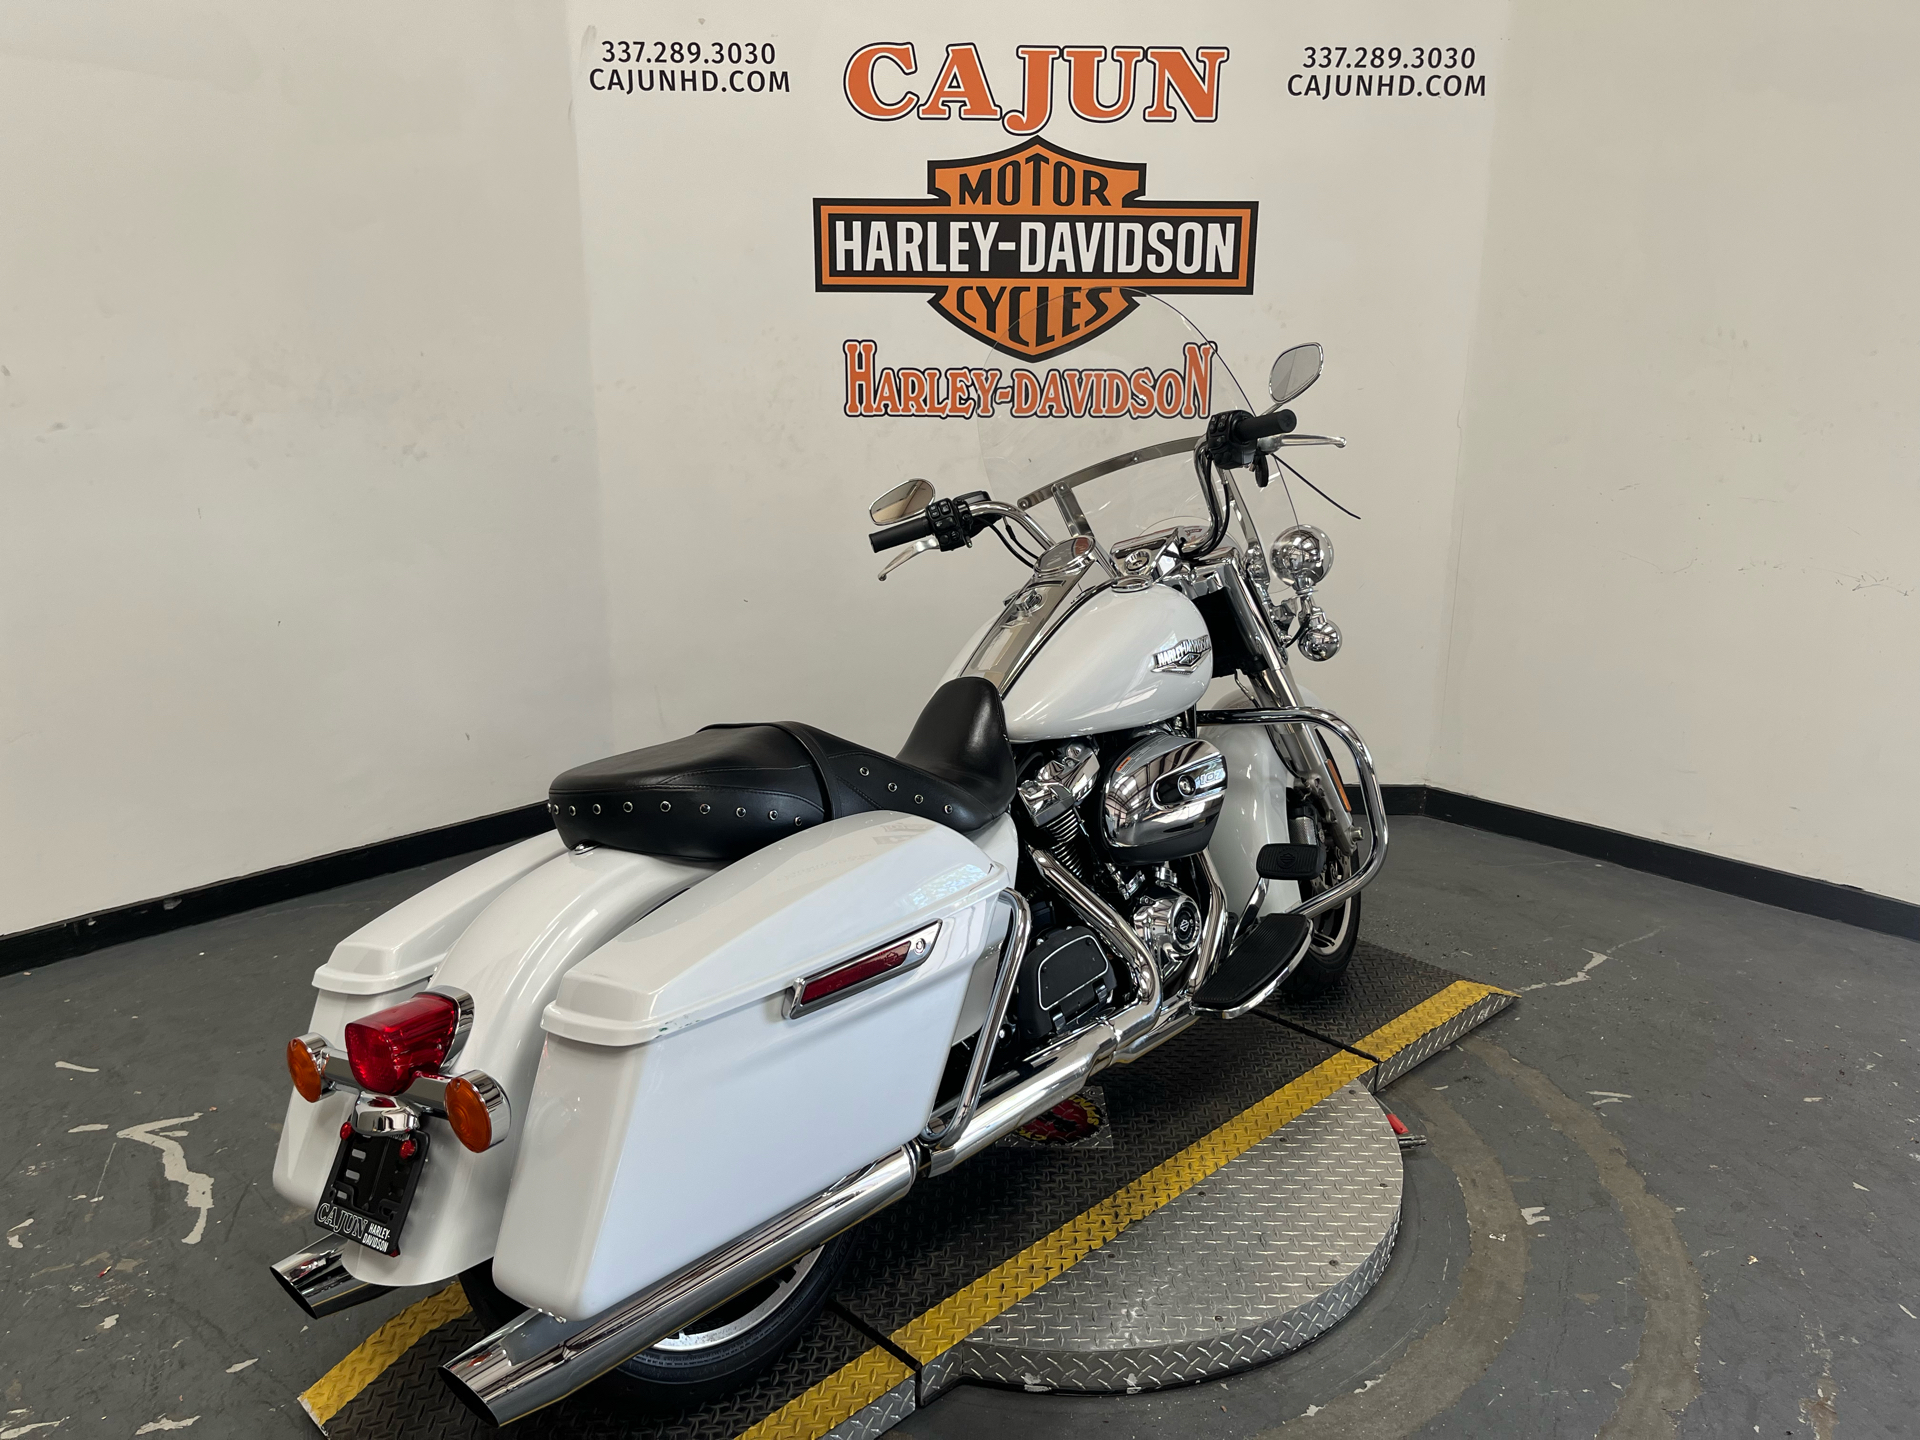 2020 Harley-Davidson Road King® in Scott, Louisiana - Photo 3